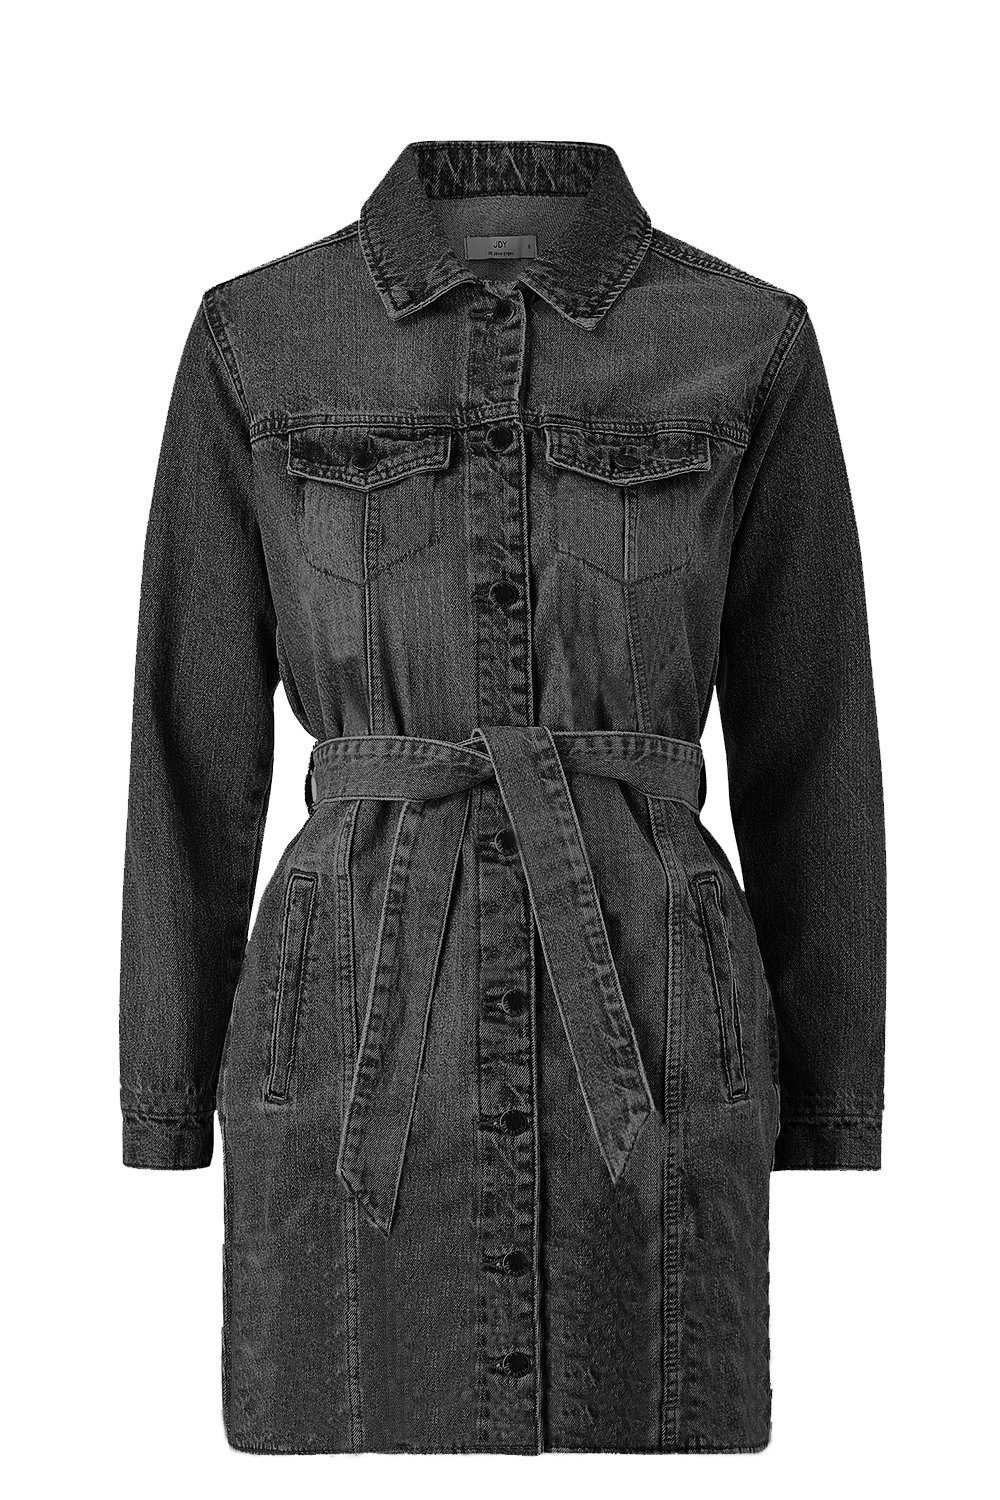 JACQUELINE de YONG Shirtkleid Jeans Blusen Kleid JDYSANSA LIFE Midi Rock Dress Denim Design (lang) 3754 in Schwarz